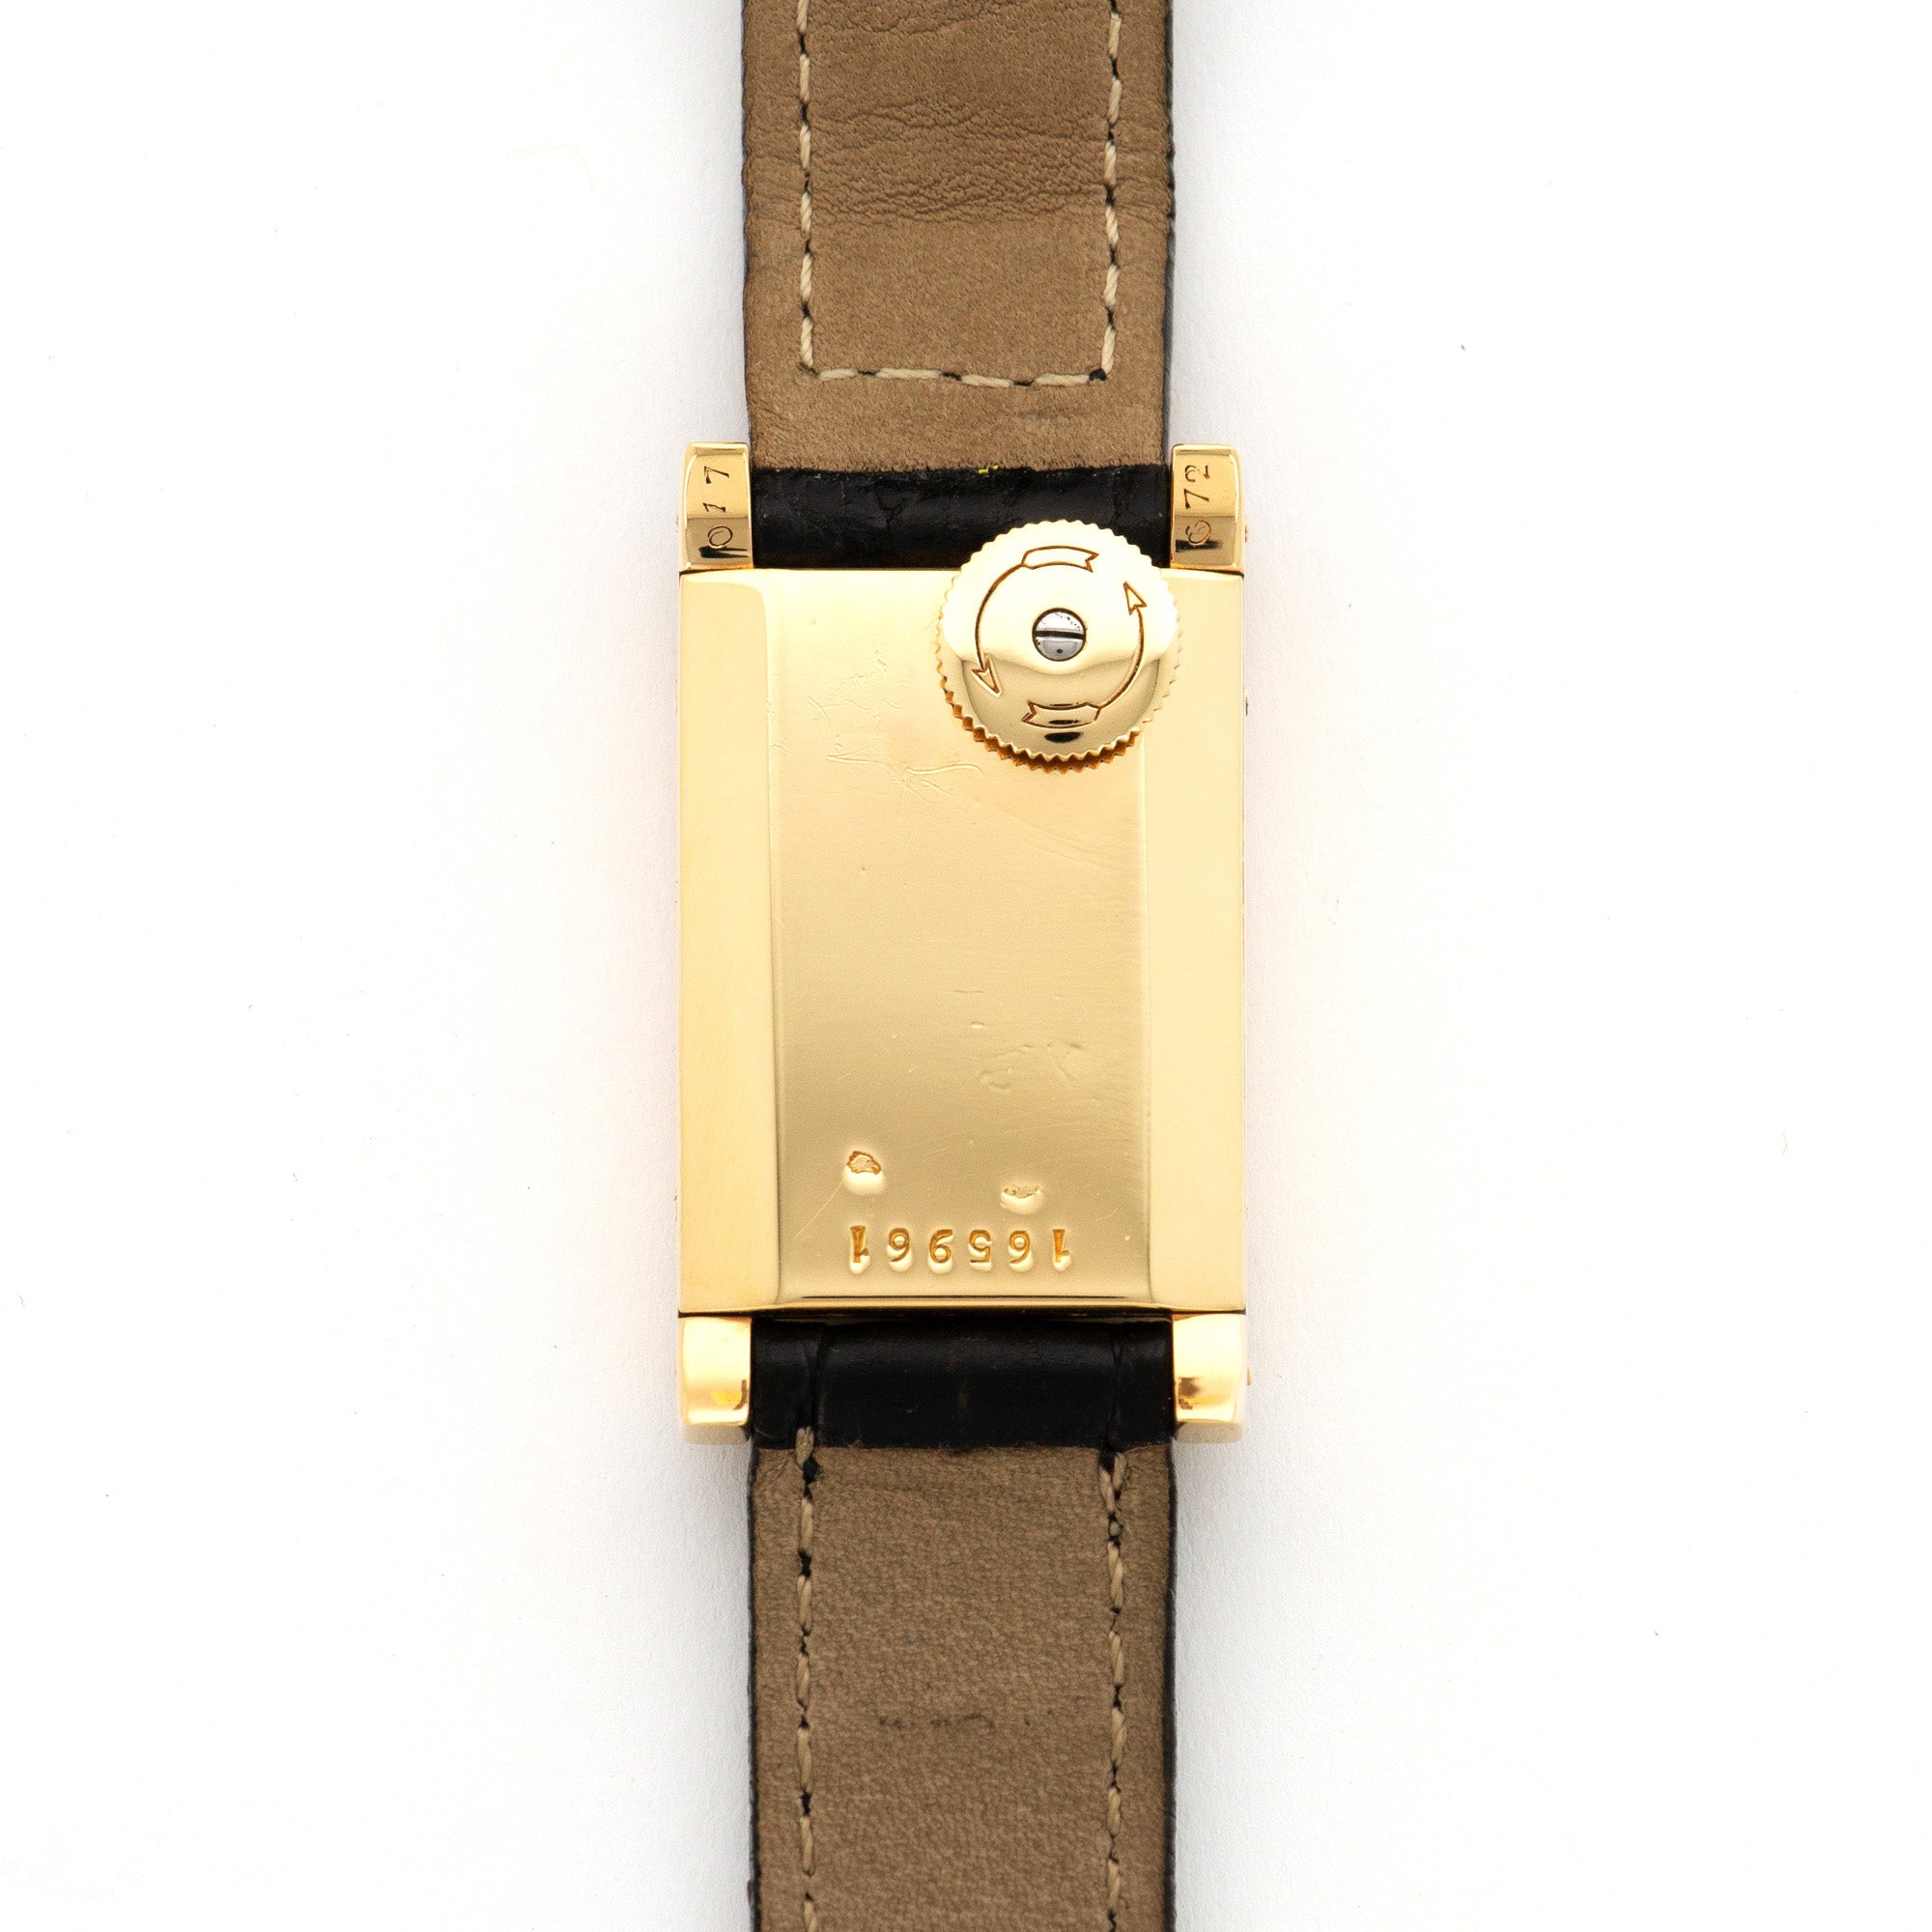 Cartier - Cartier Yellow Gold Tank Bec dAigle Watch - The Keystone Watches